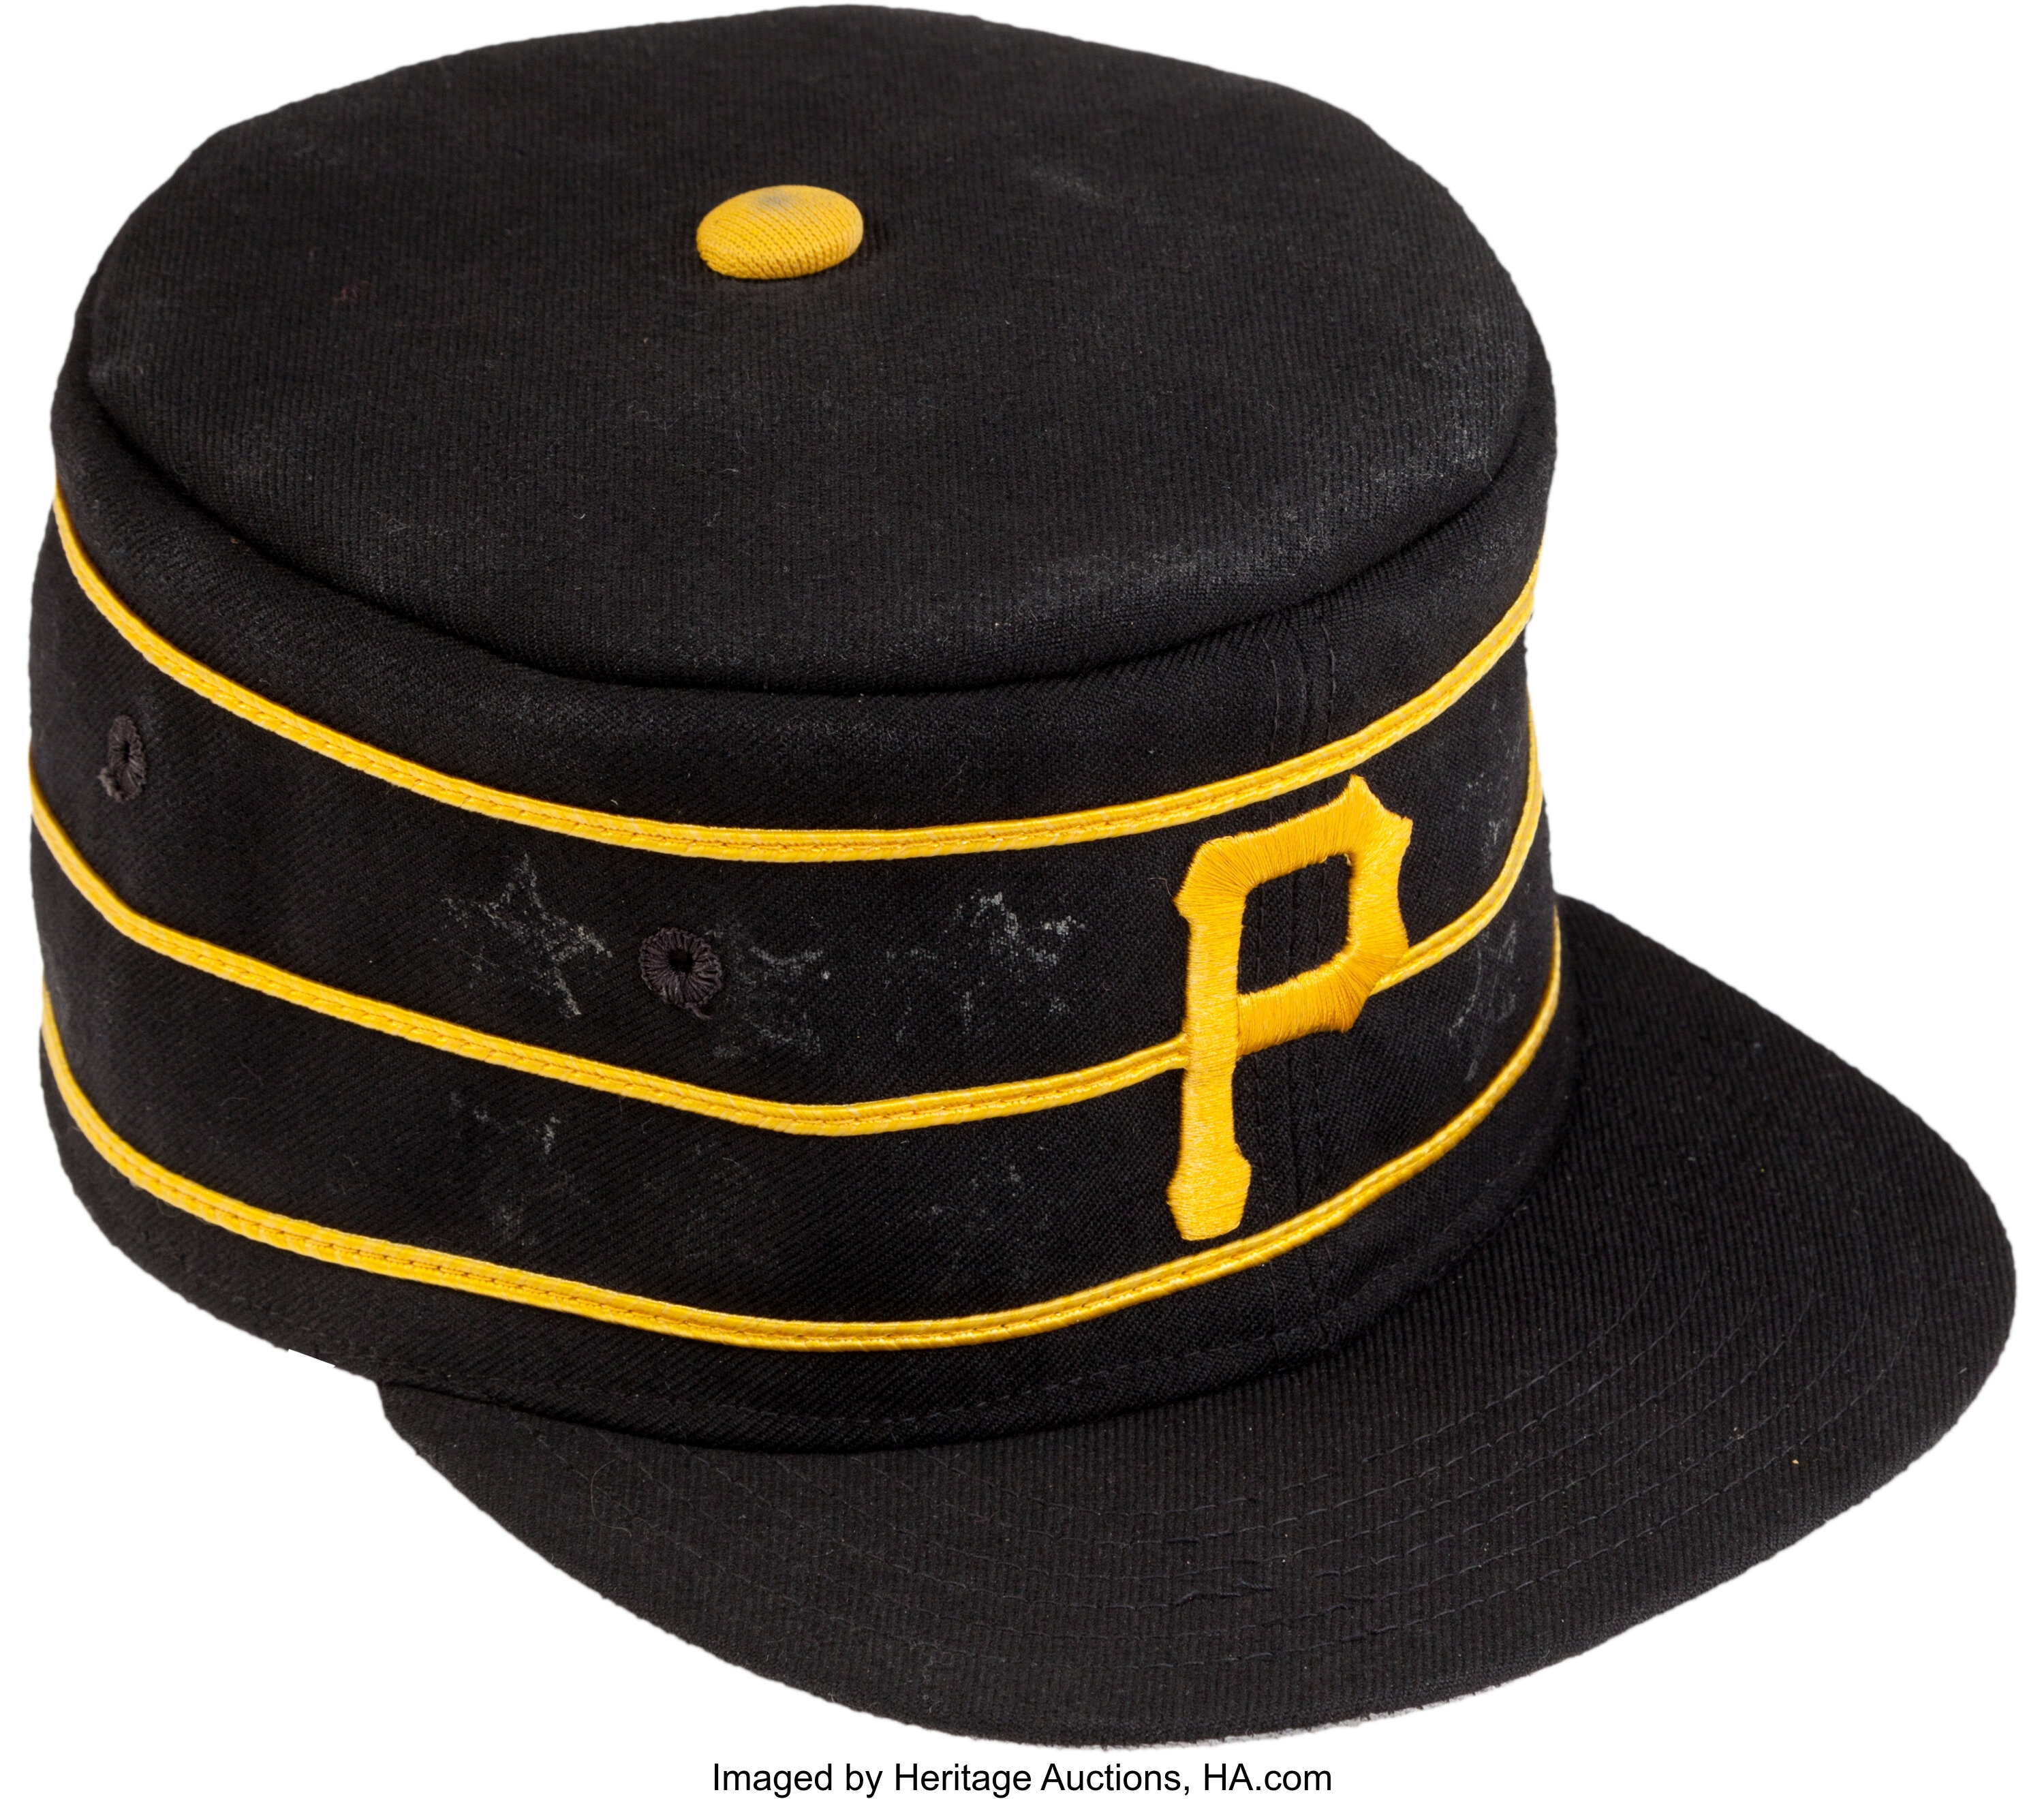 Circa 1982 Willie Stargell Game Worn Pittsburgh Pirates Cap